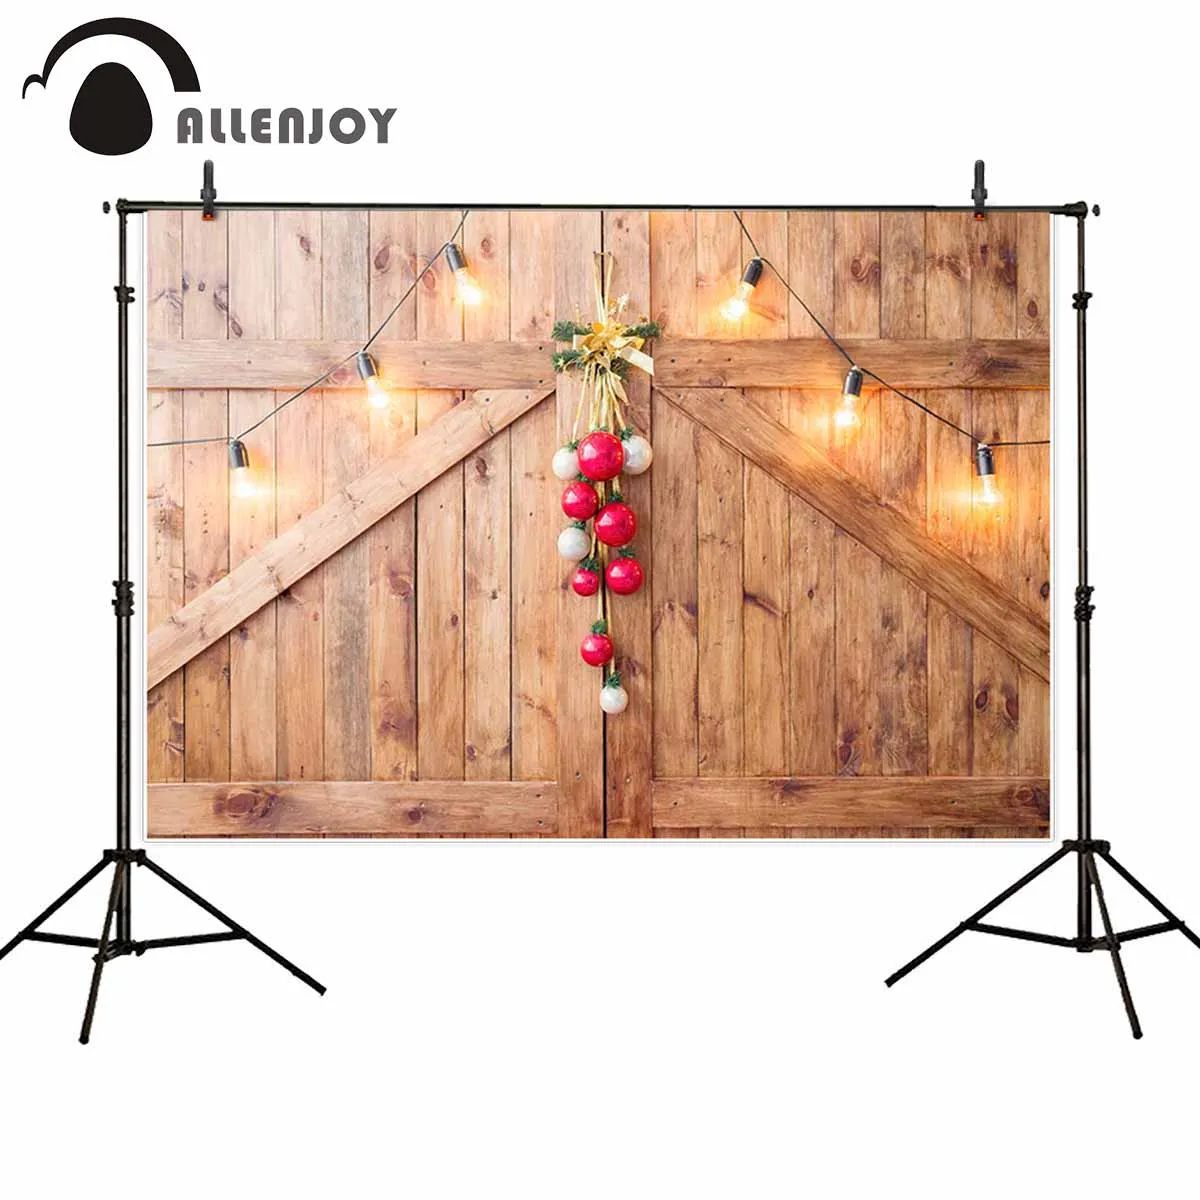 

Allenjoy photography backdrop Christmas headboard wood berry decor background photocall photo shoot prop photobooth